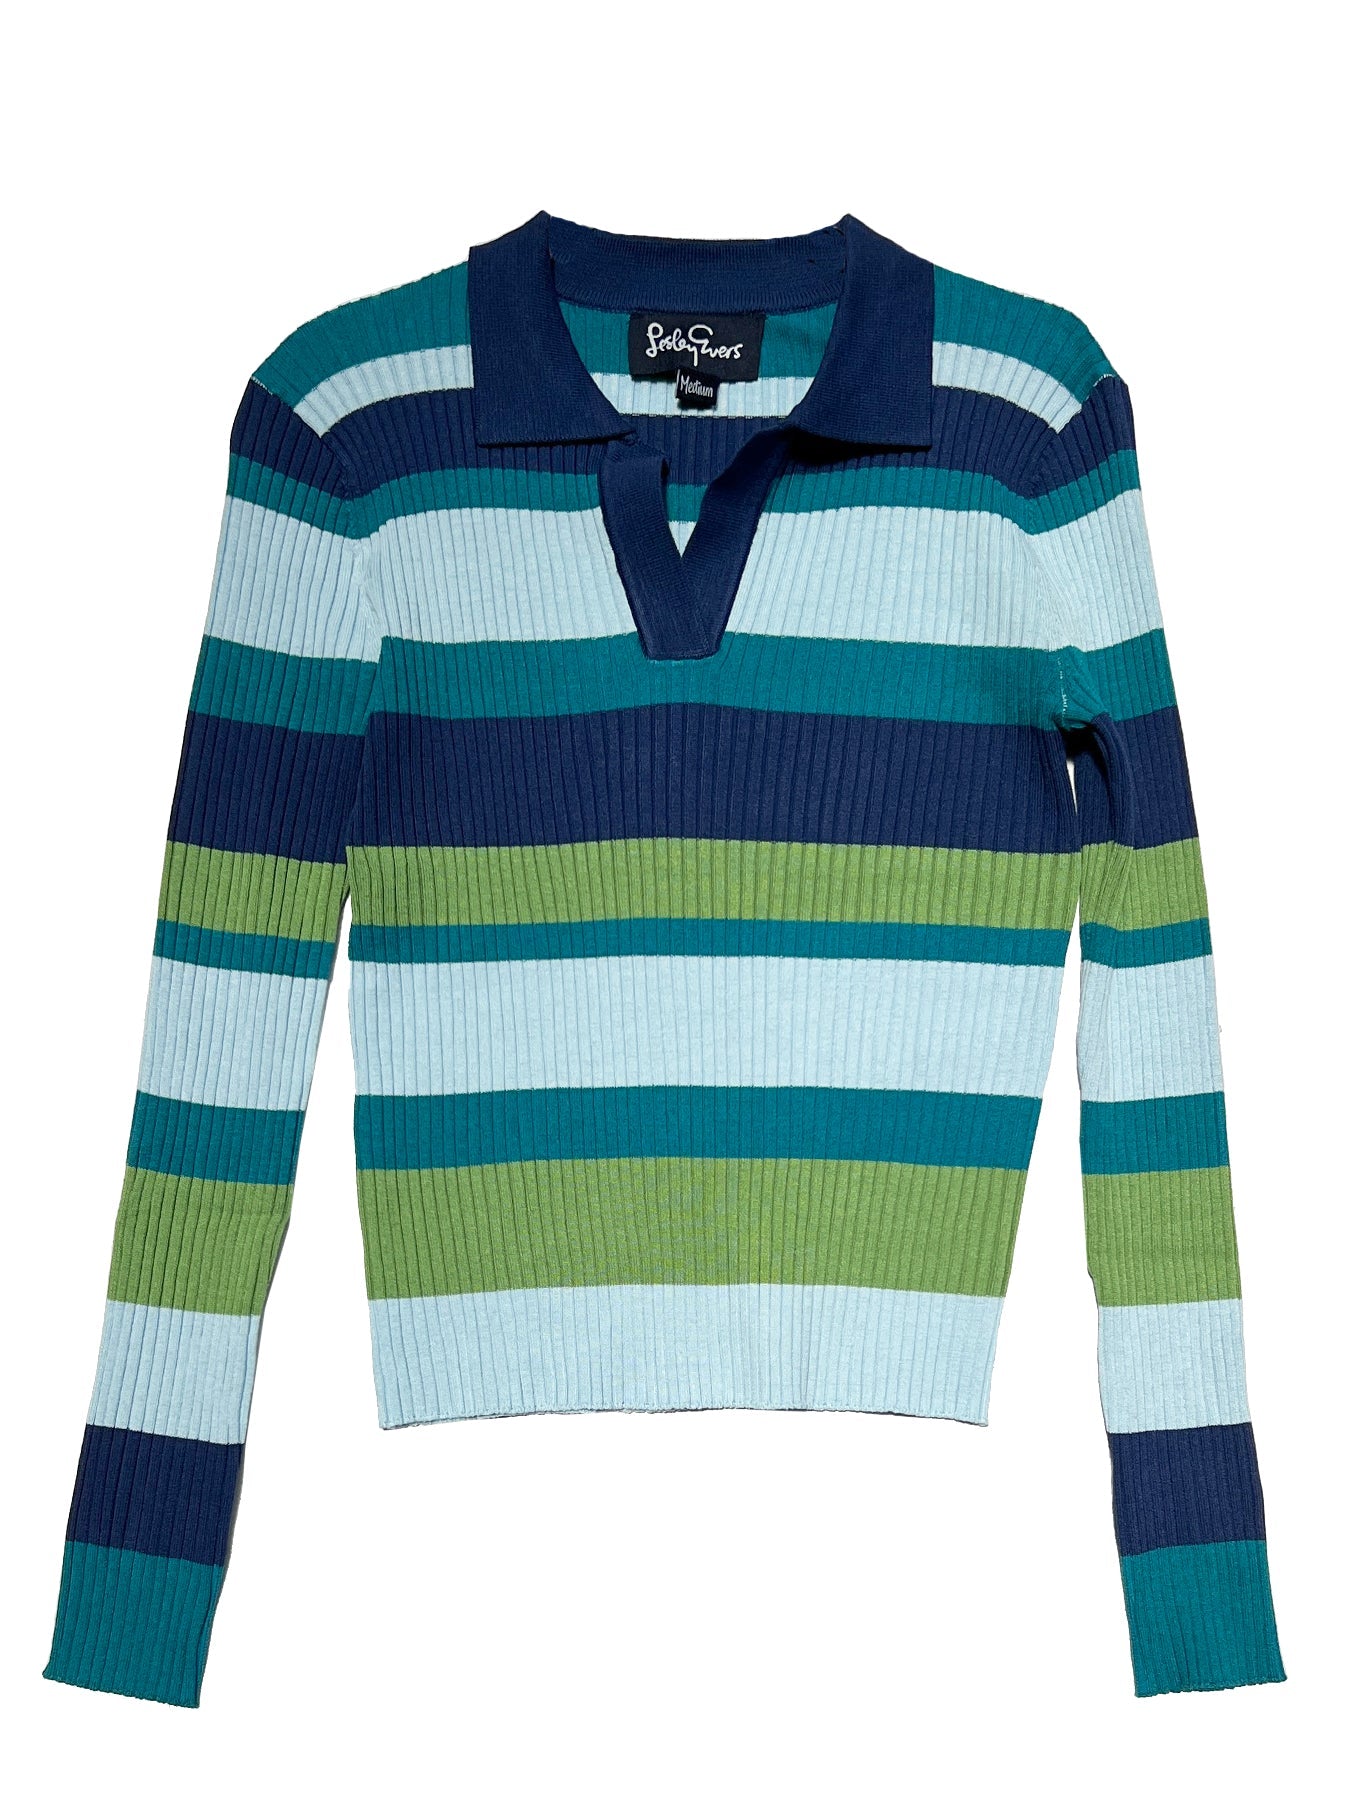 TAYLOR knit top Blue Stripe - Lesley Evers-Shop-Shop/All Products-Shop/Separates